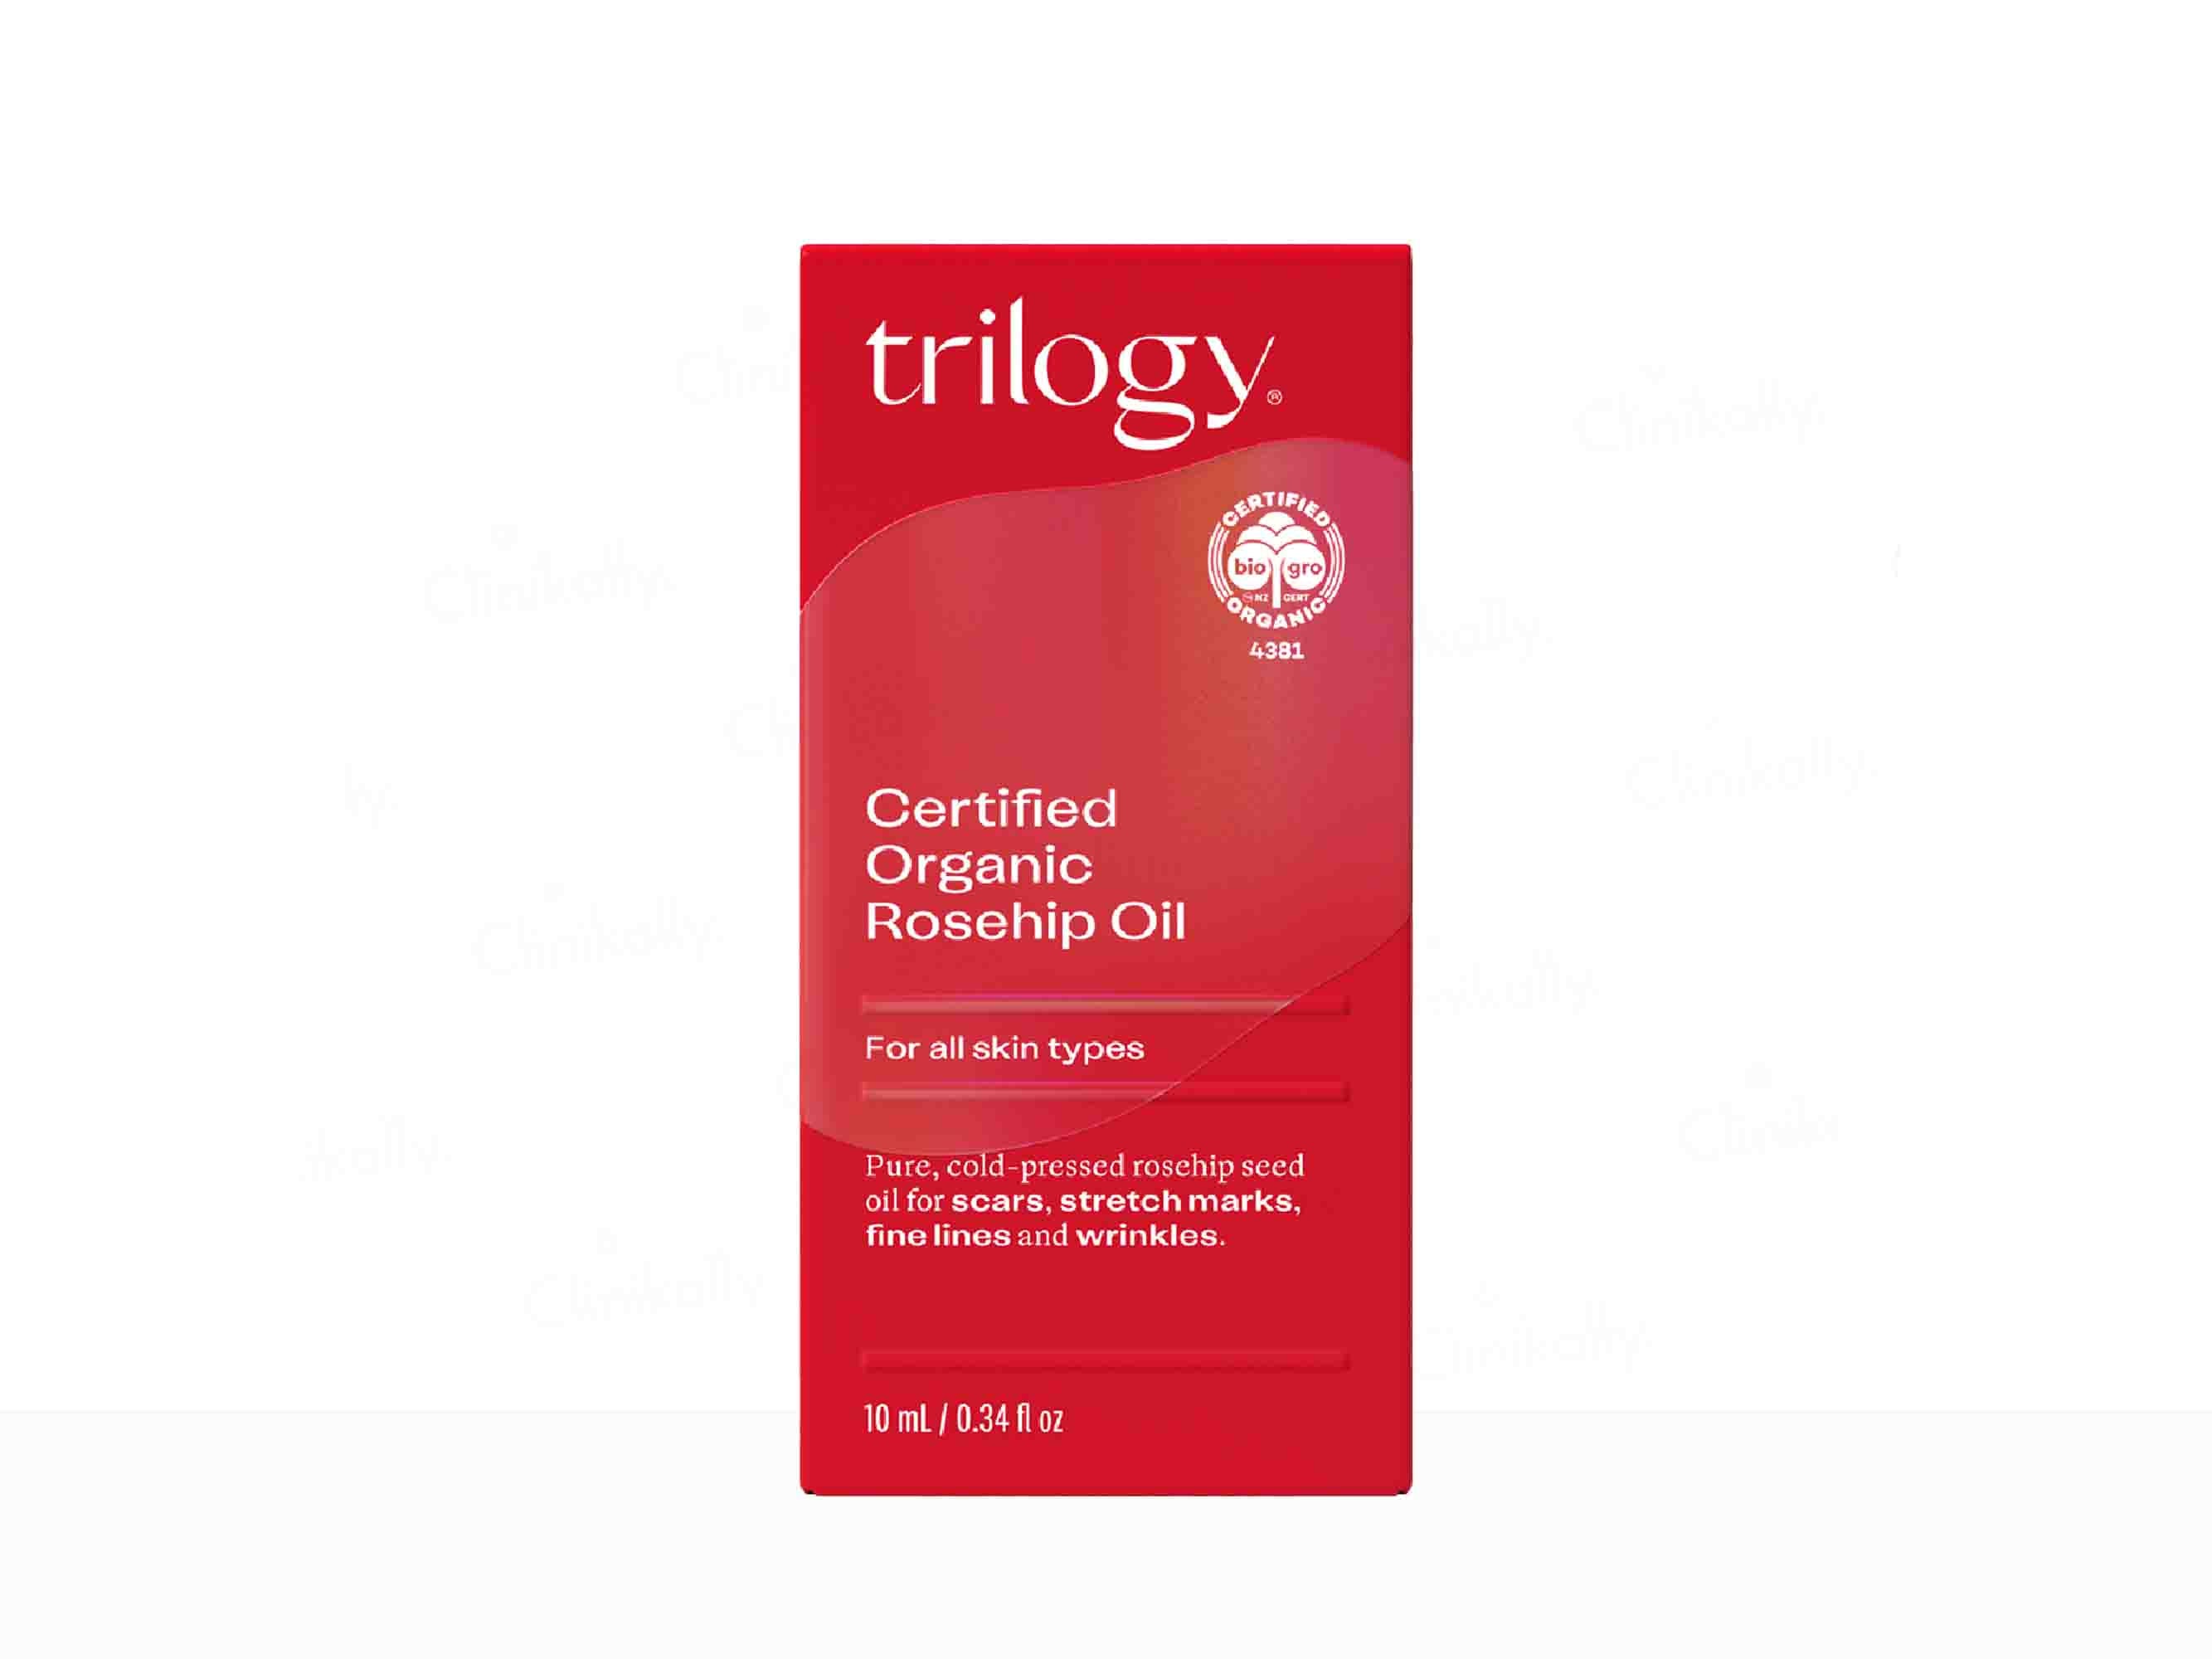 Trilogy Certified Organic Rosehip Oil